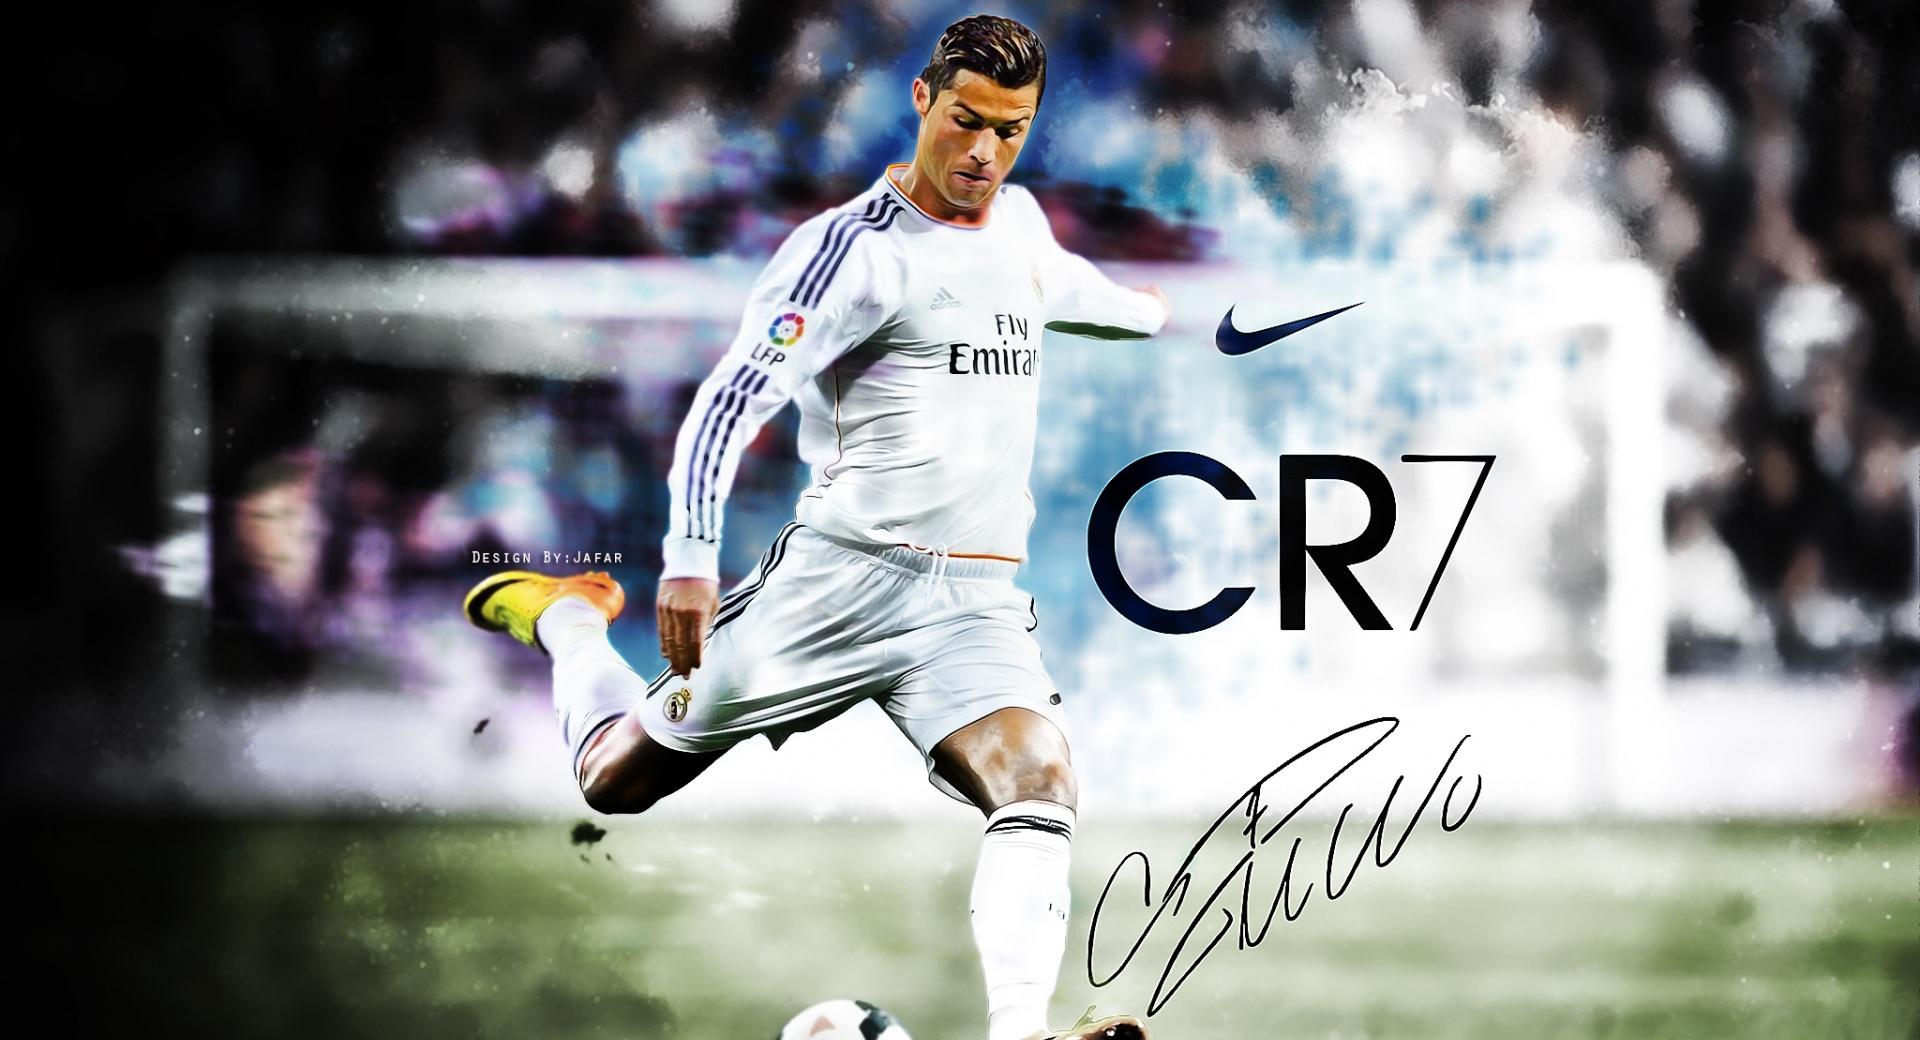 Cristiano Ronaldo Real Madrid Wallpaper 2014 at 2048 x 2048 iPad size wallpapers HD quality